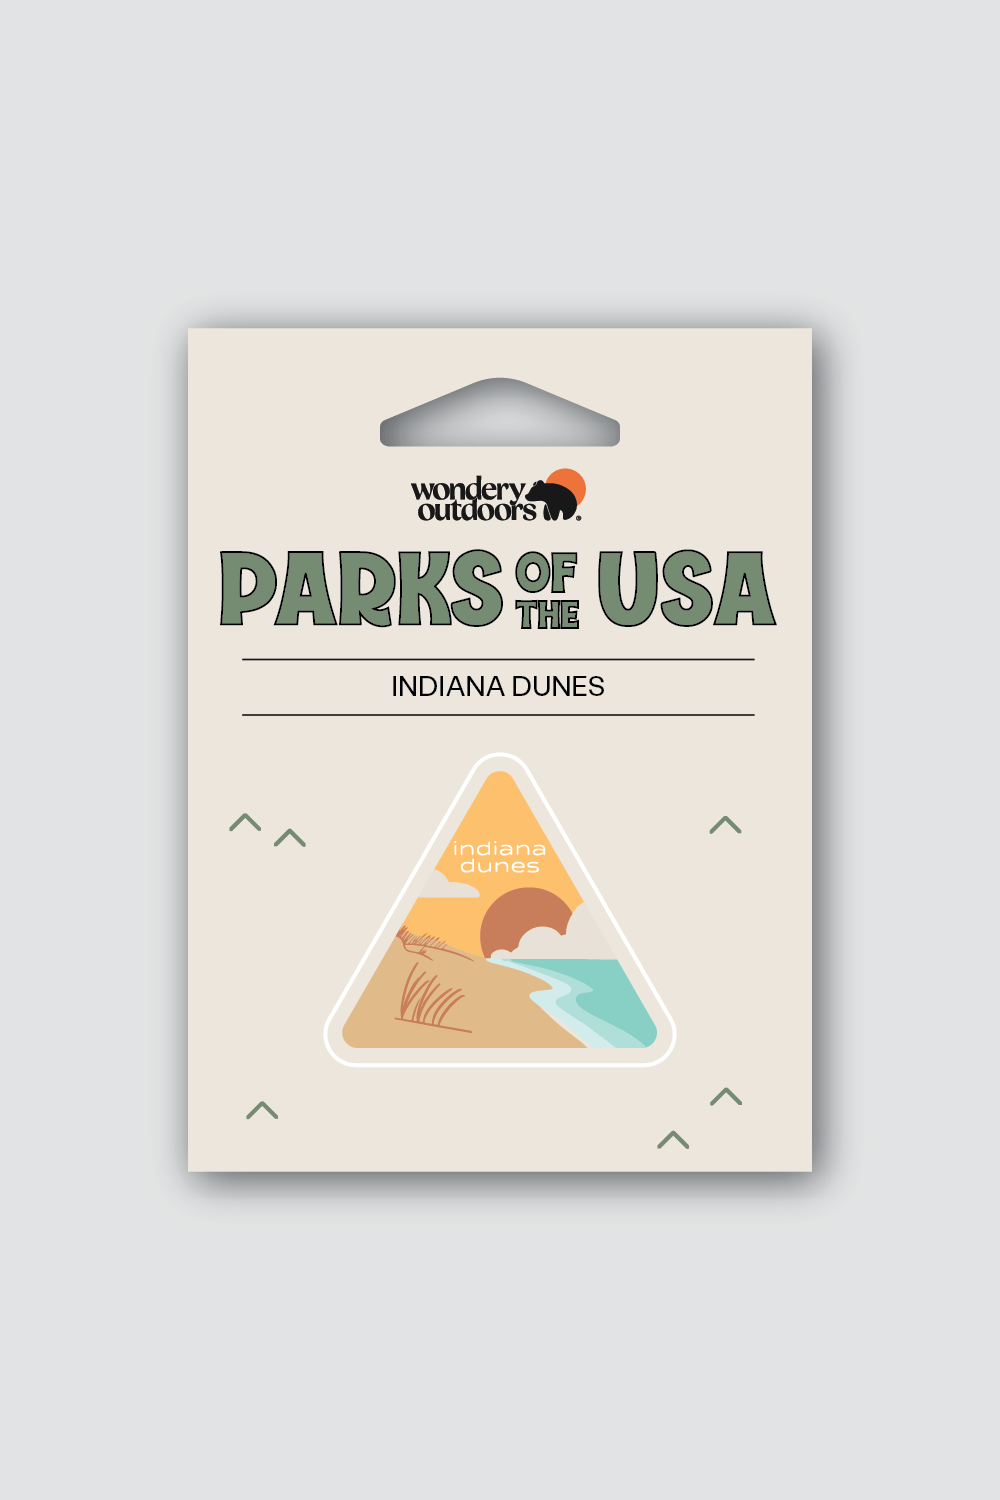 #national park_indiana dunes _USA National Parks souvenir sticker gift sets